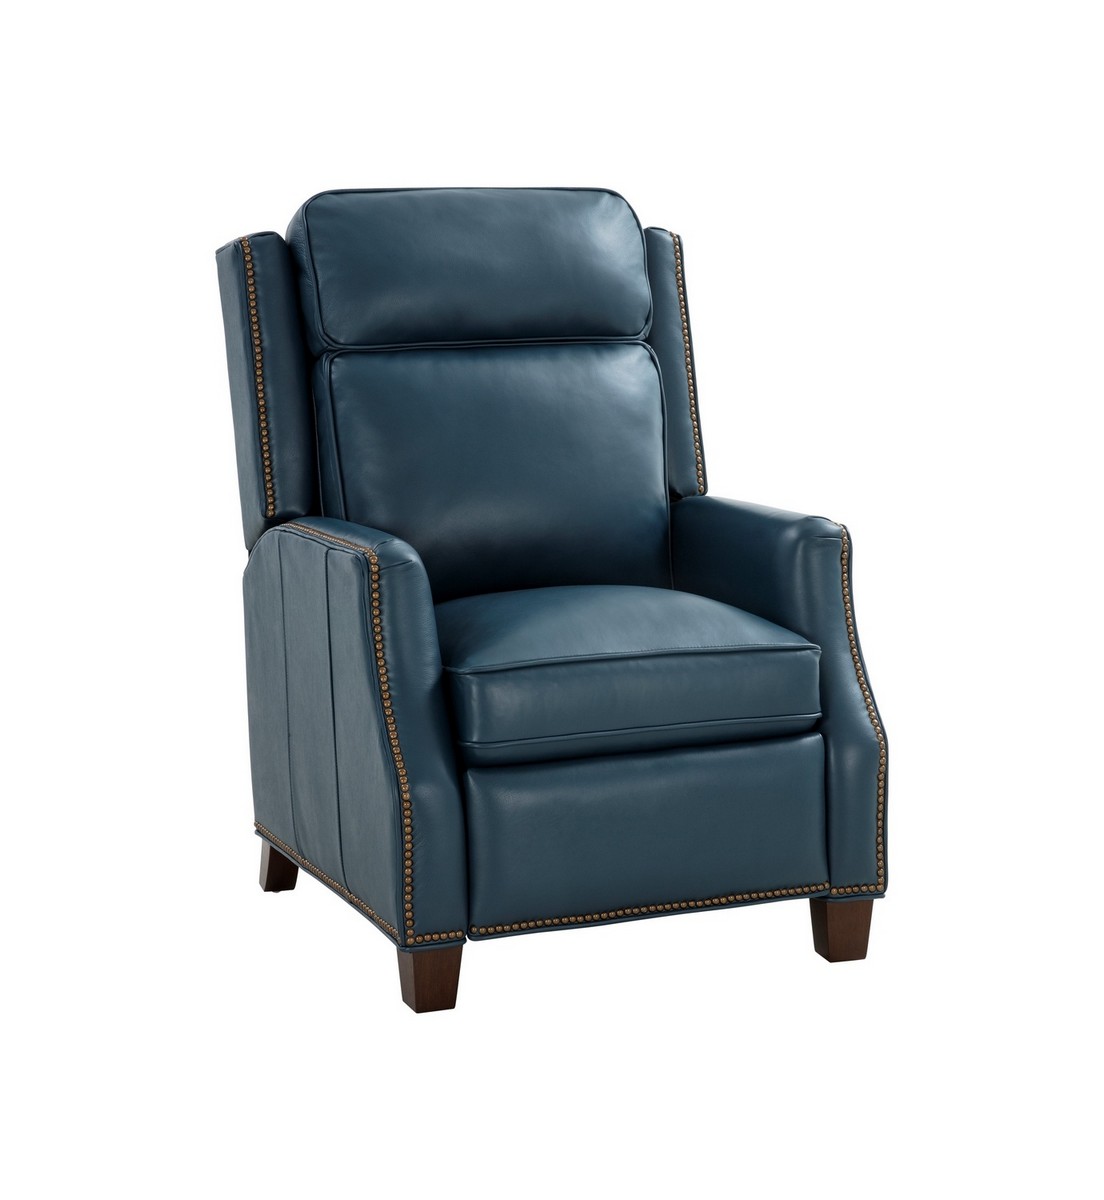 Barcalounger Van Buren Recliner Chair - Prestin Yale Blue/All Leather